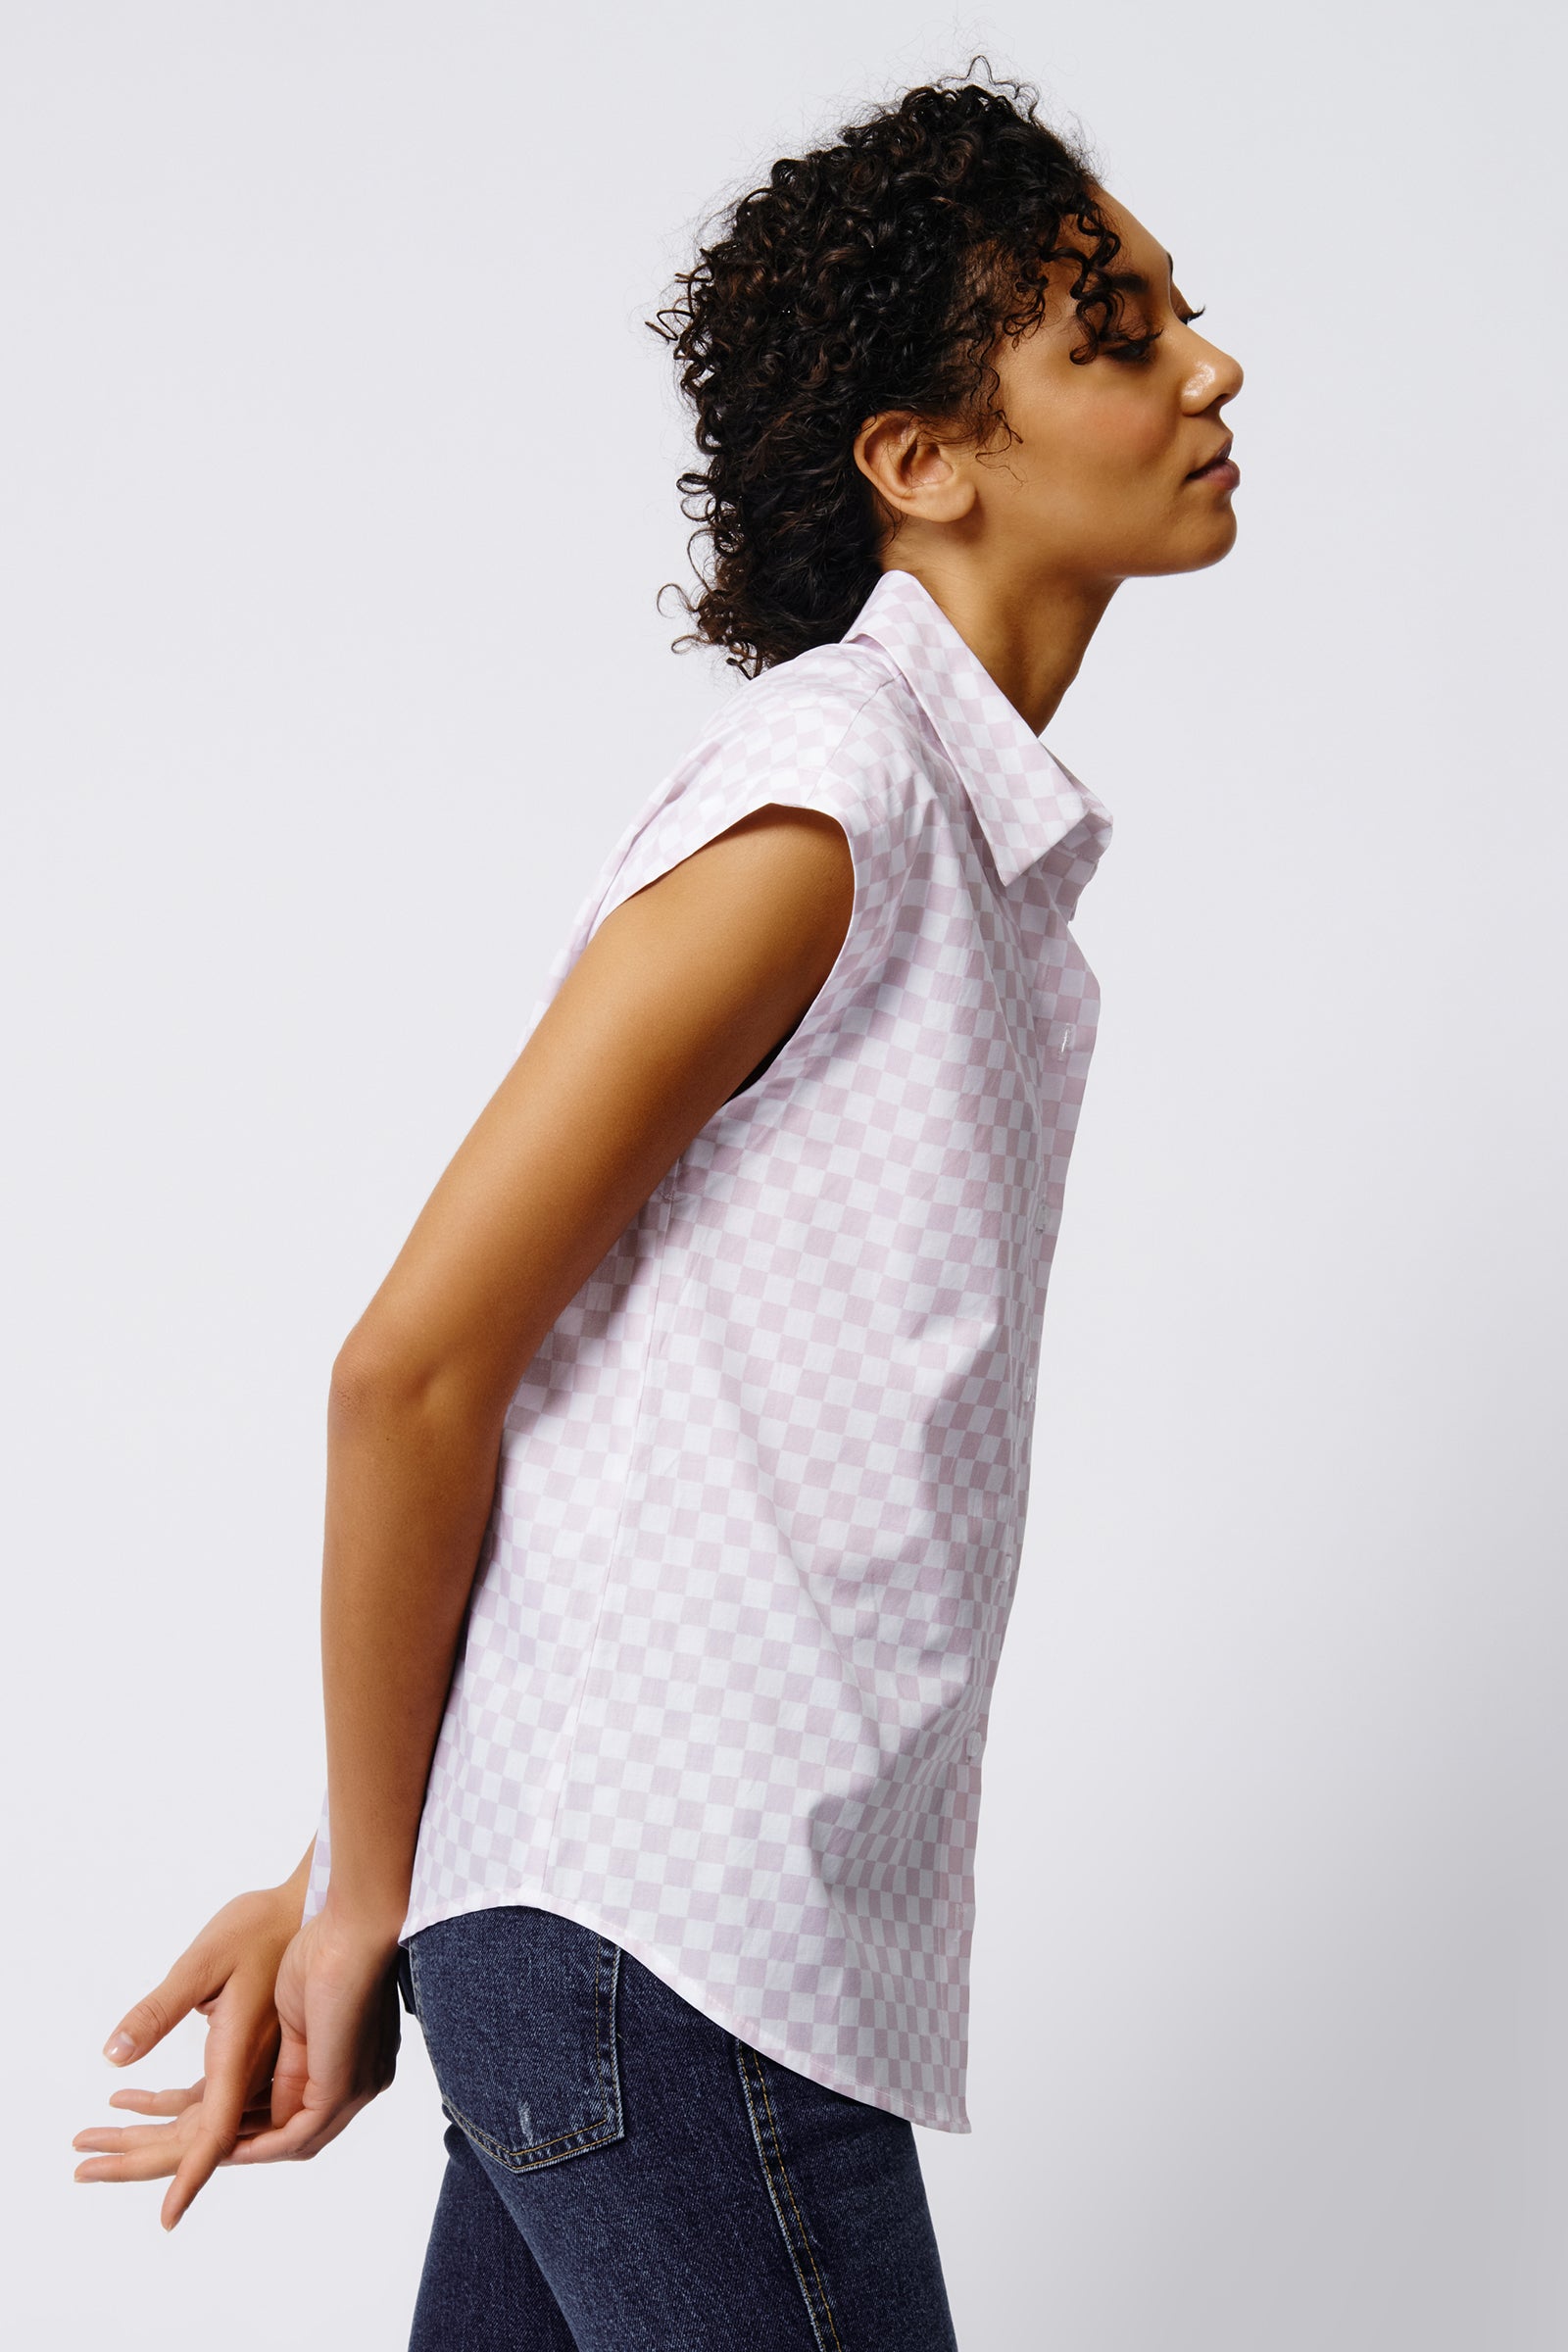 Kal Rieman Cap Sleeve Shirt in Lavender Checkerboard on Model Side View Crop